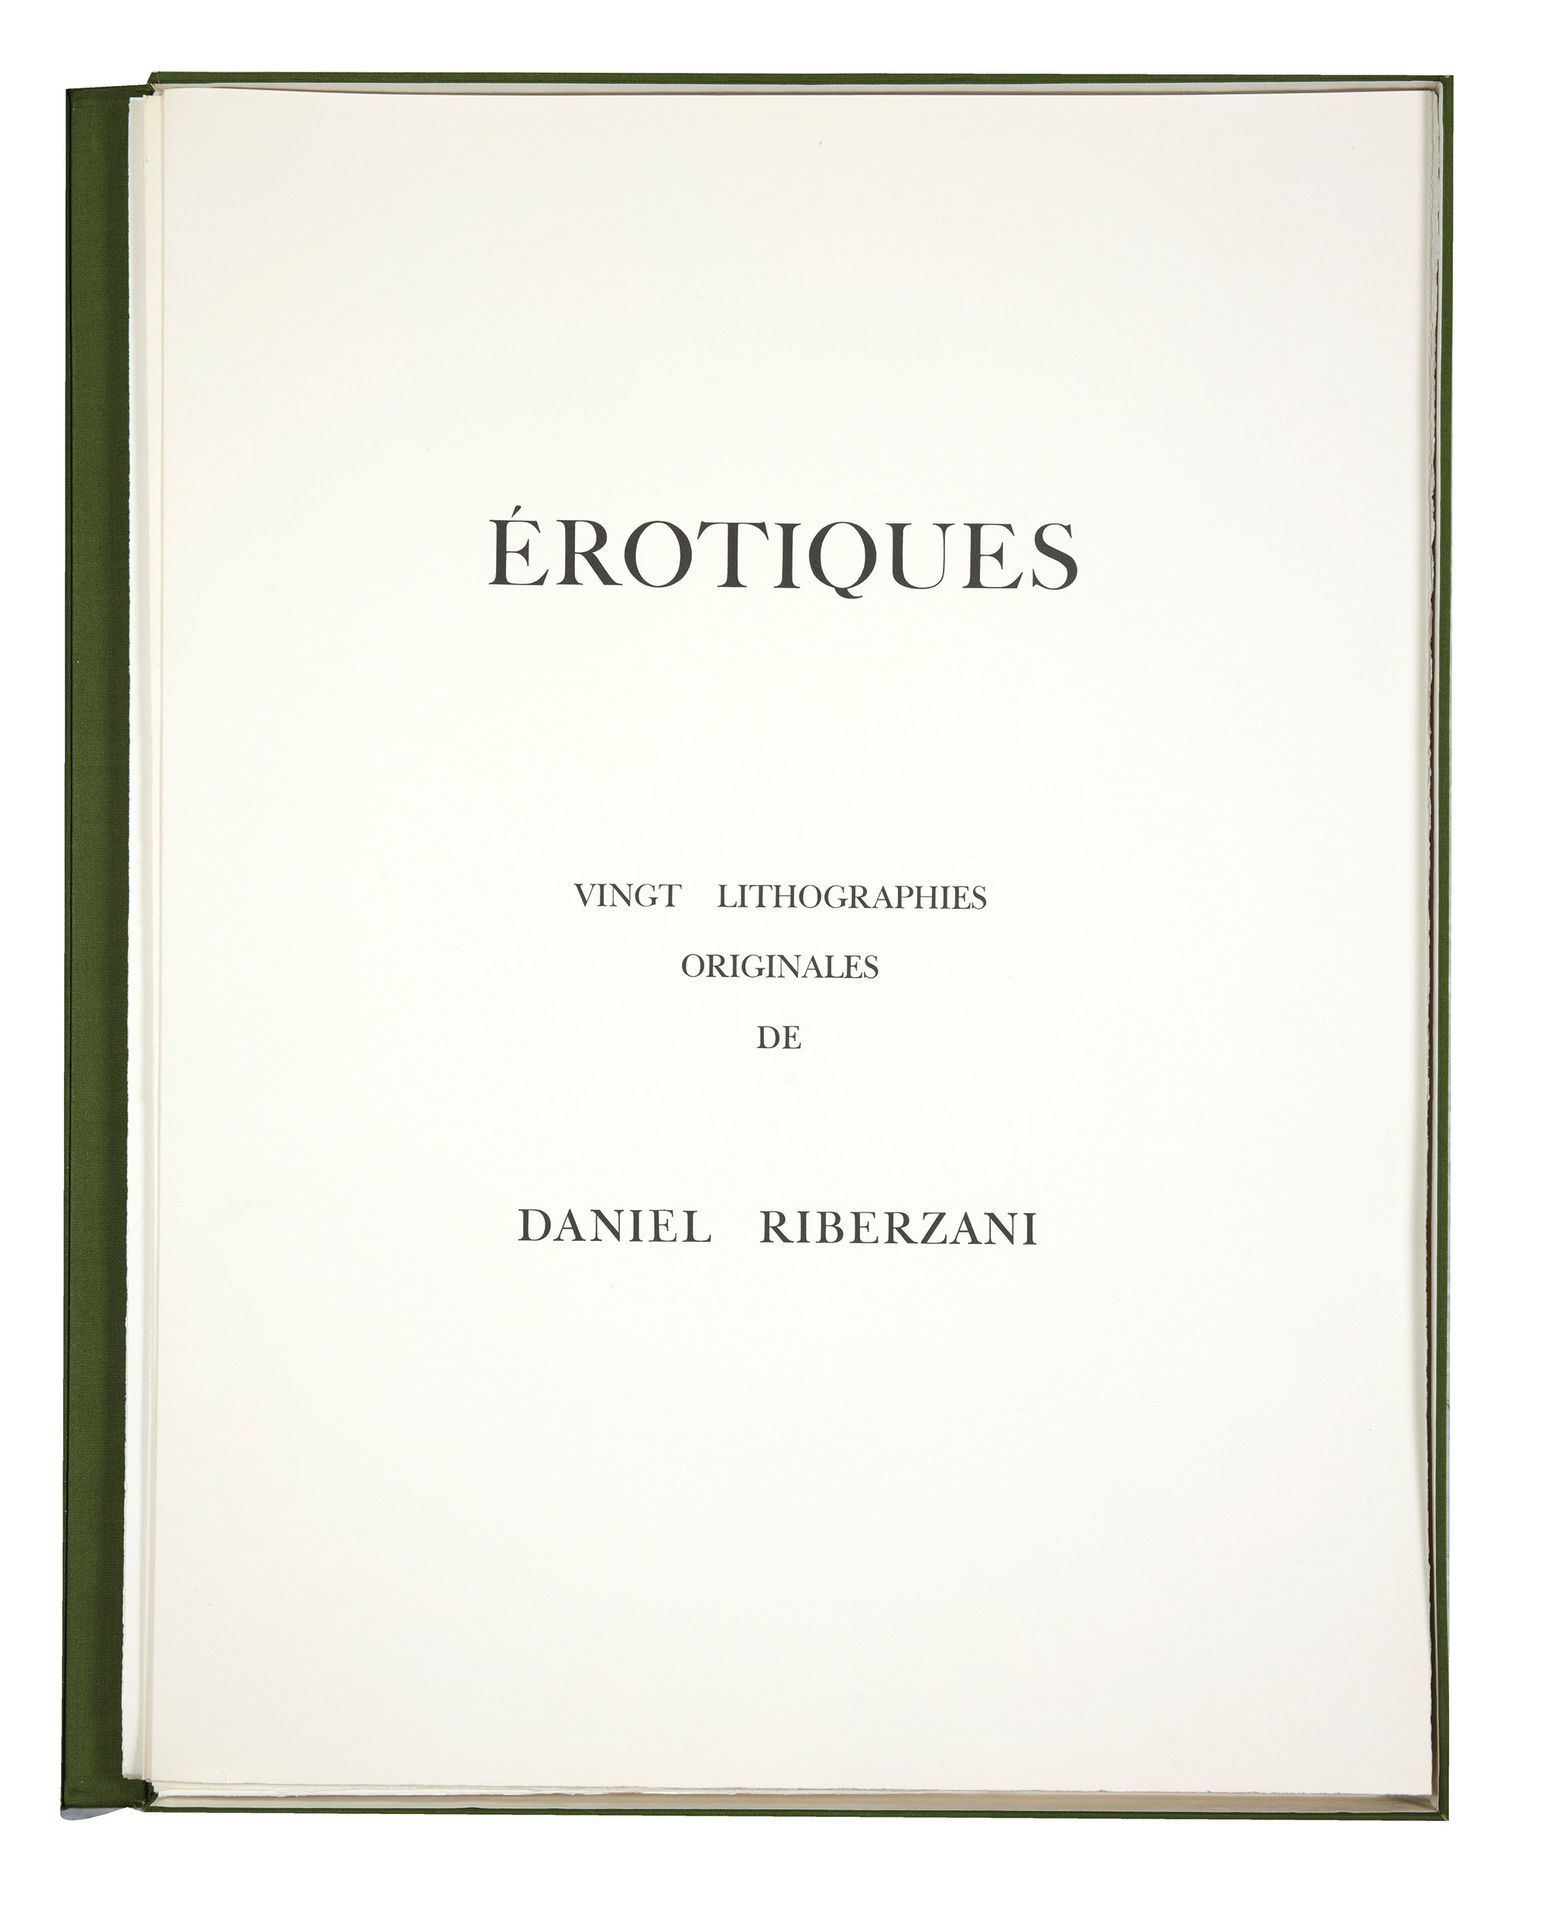 Daniel RIBERZANI Daniel RIBERZANI
Erotiques, venti litografie originali, 1971, g&hellip;